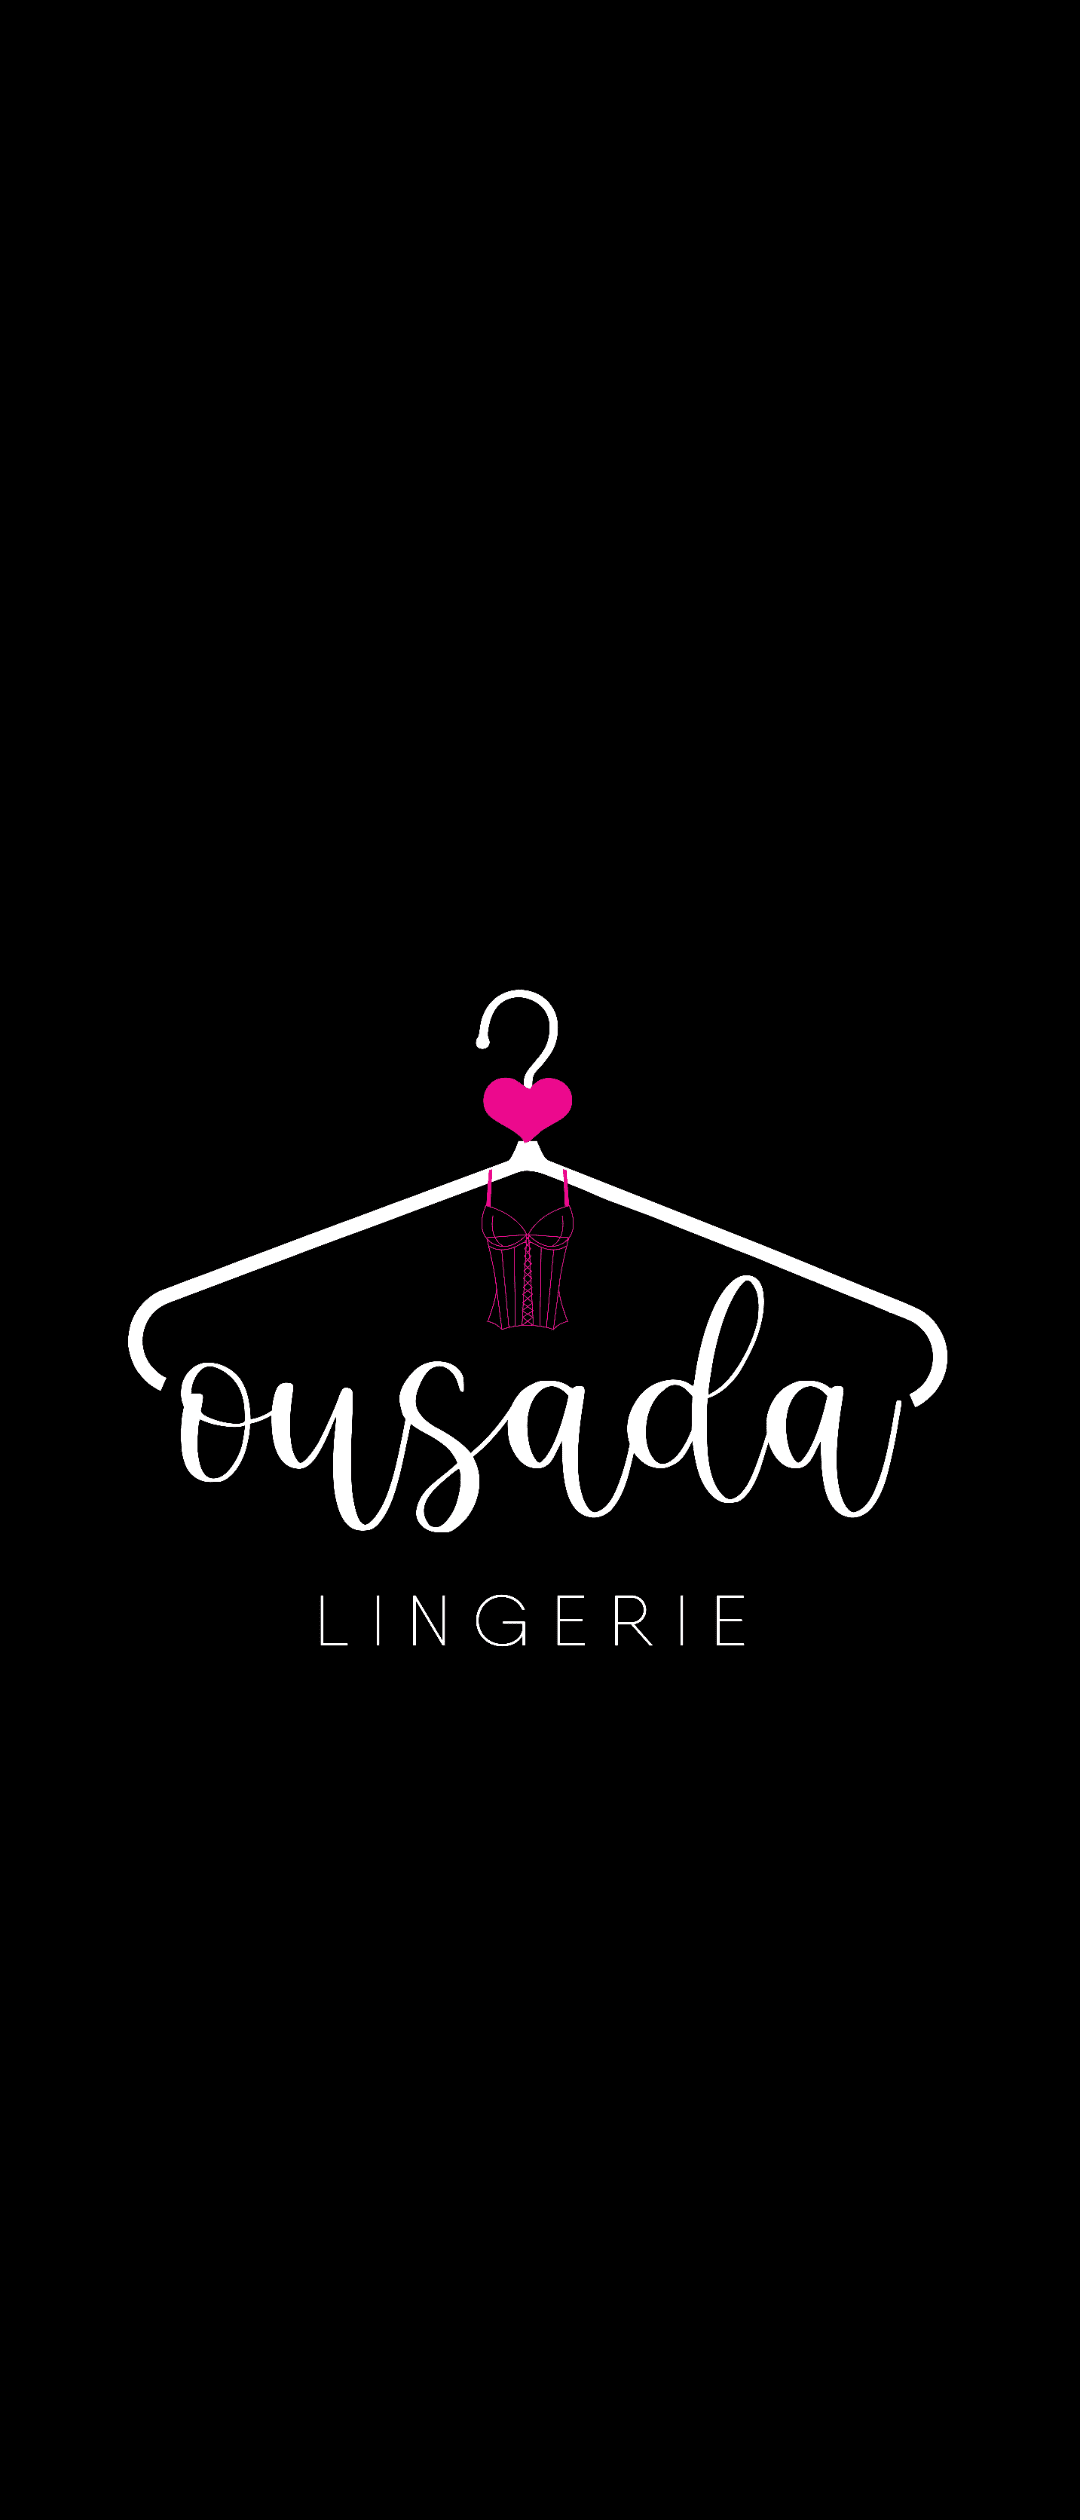 Ousada Lingerie